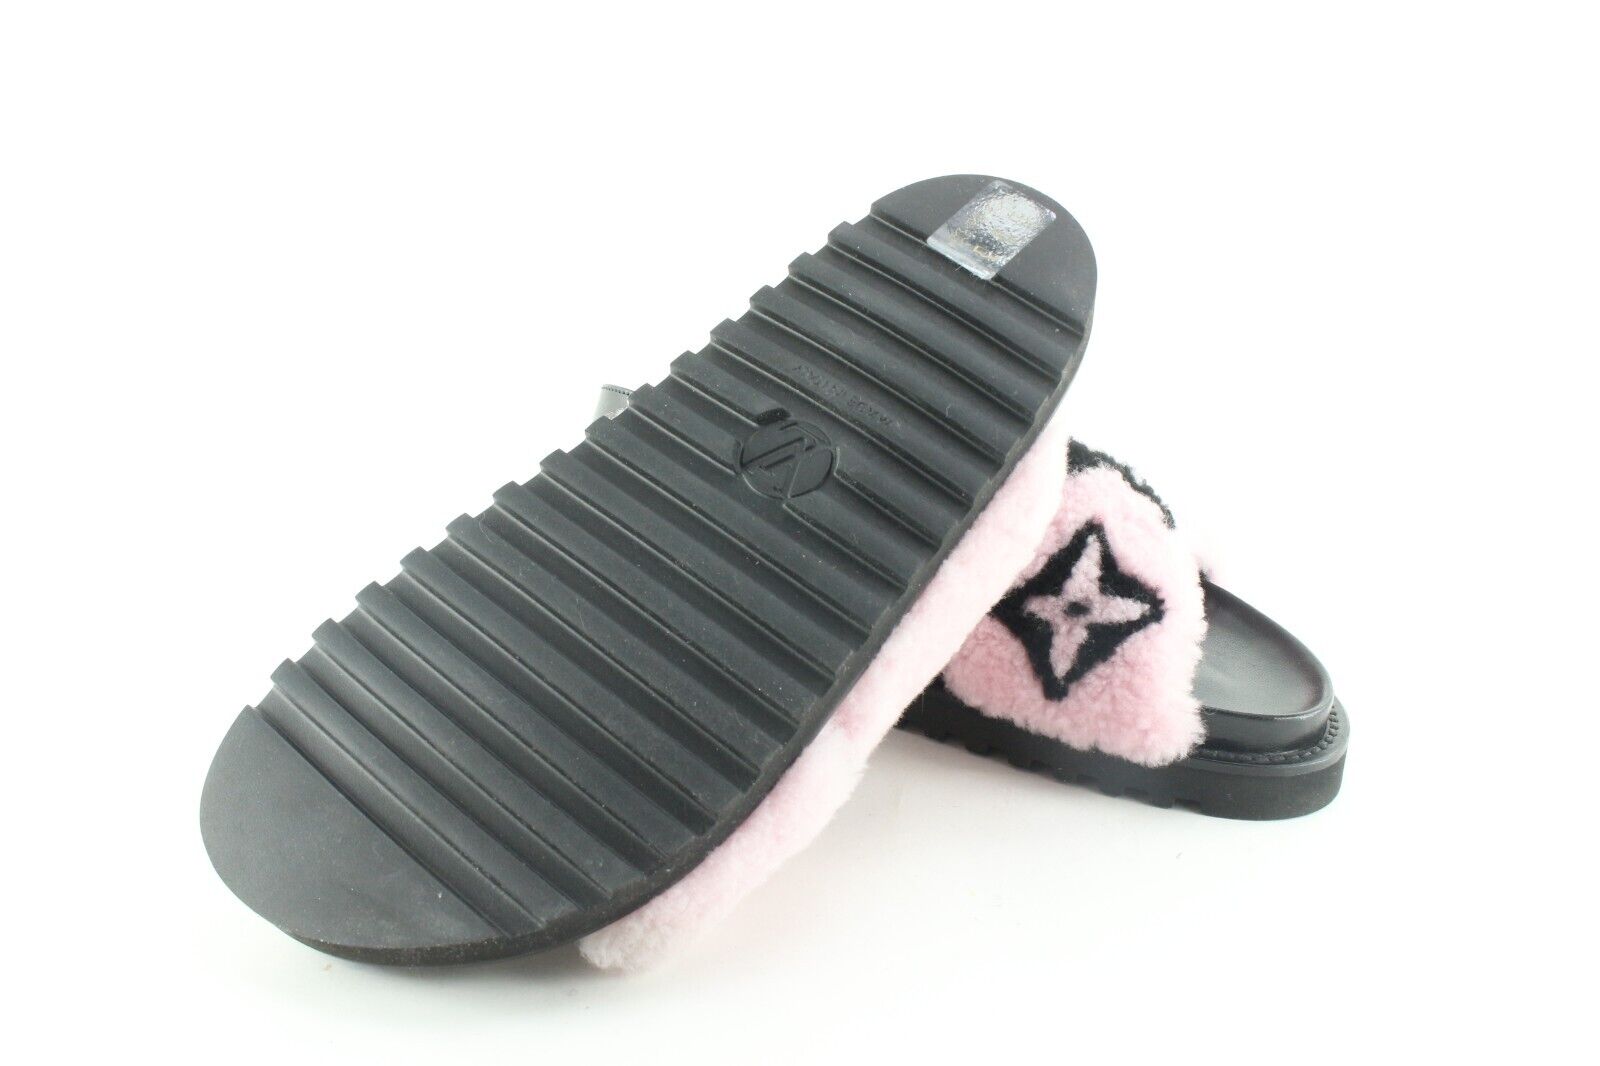 Louis Vuitton Shearling Sandals for Women